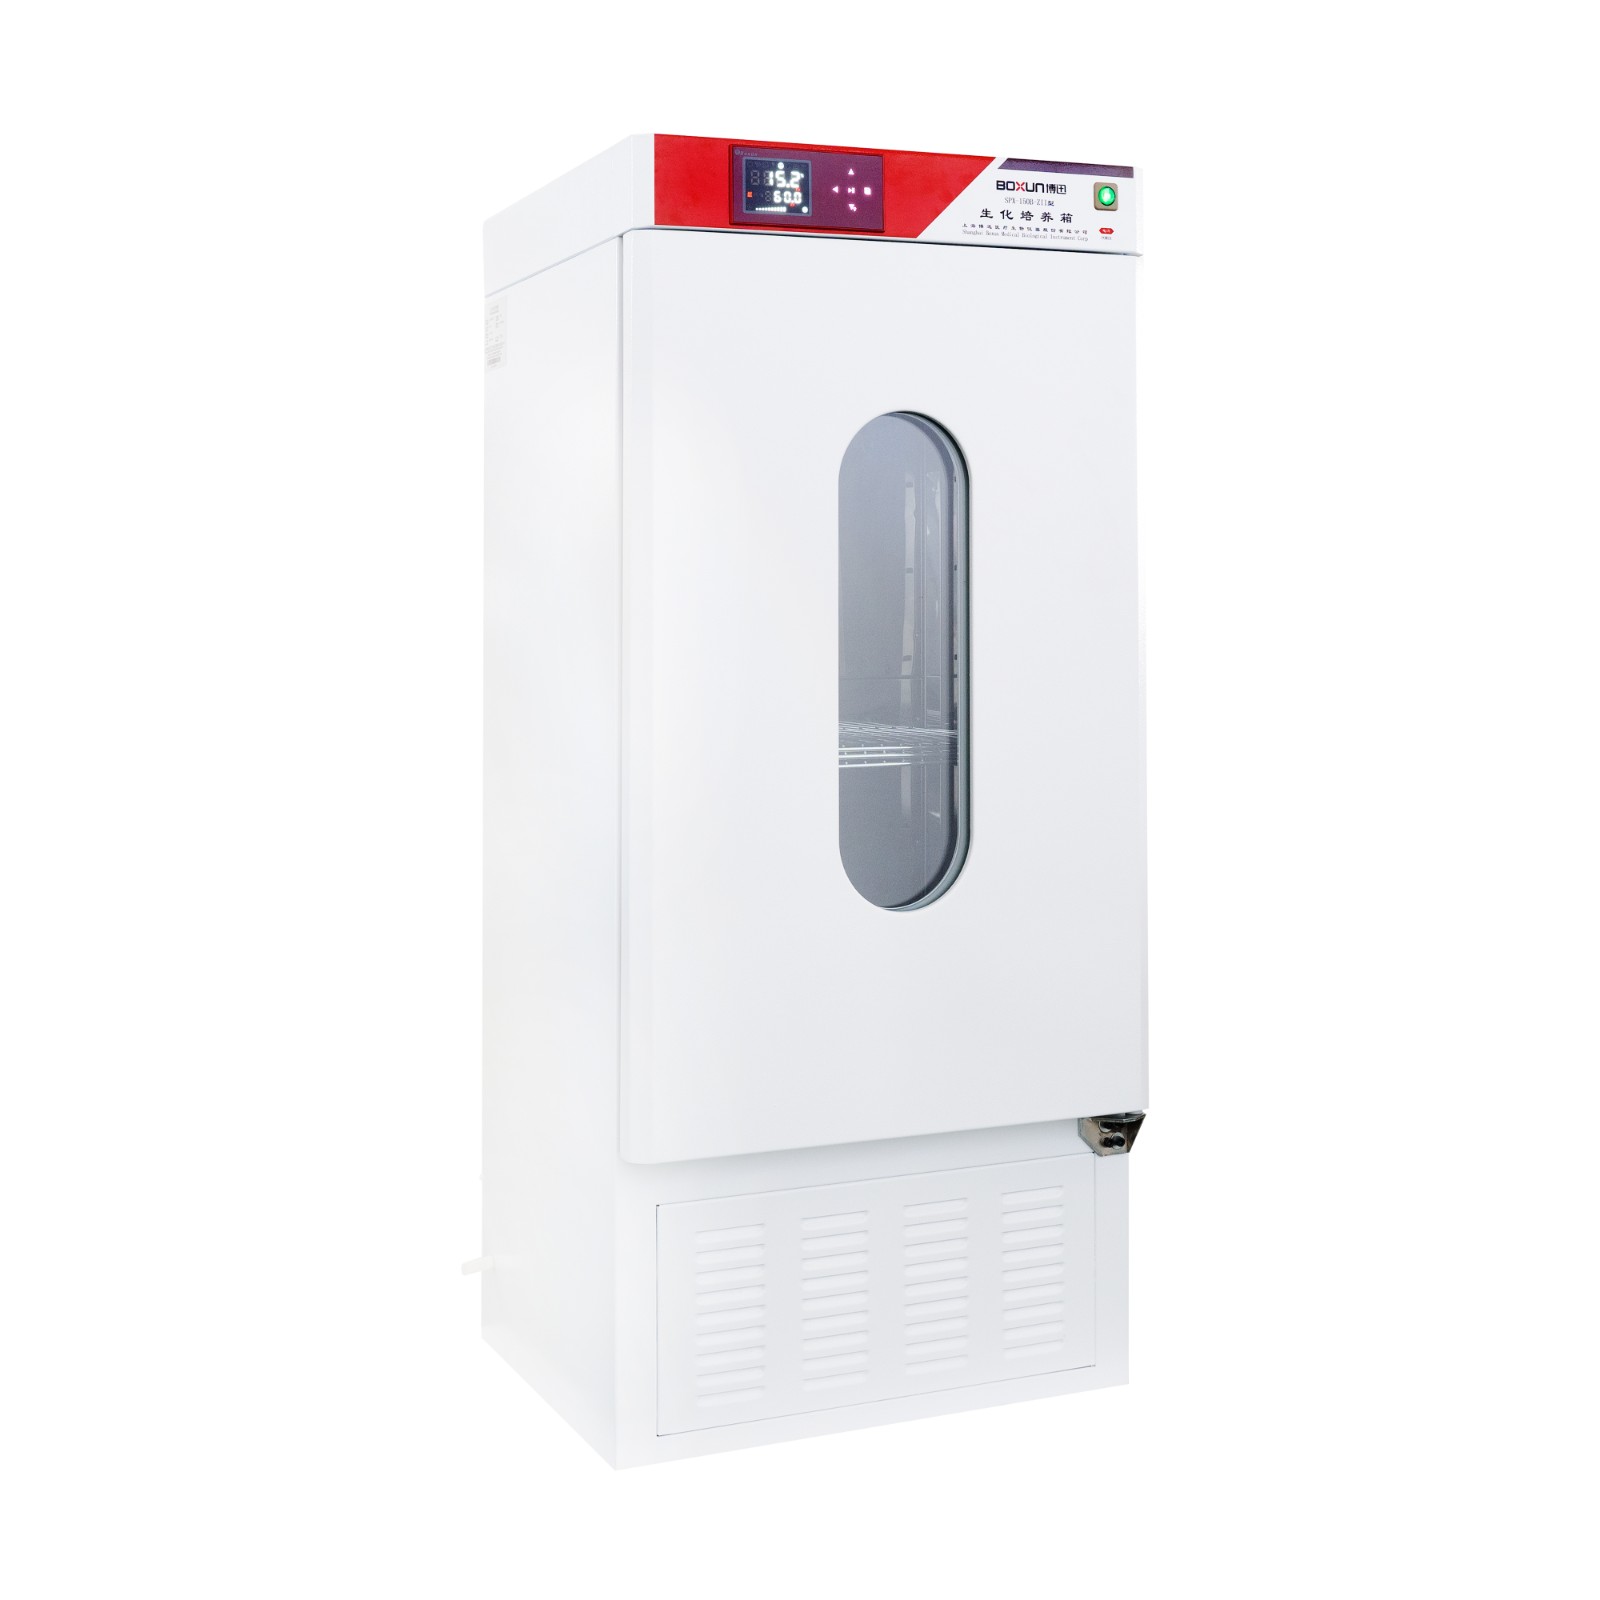 Produktfoto: Kühlinkubator 150 l Volumen mit Umluftkühlung